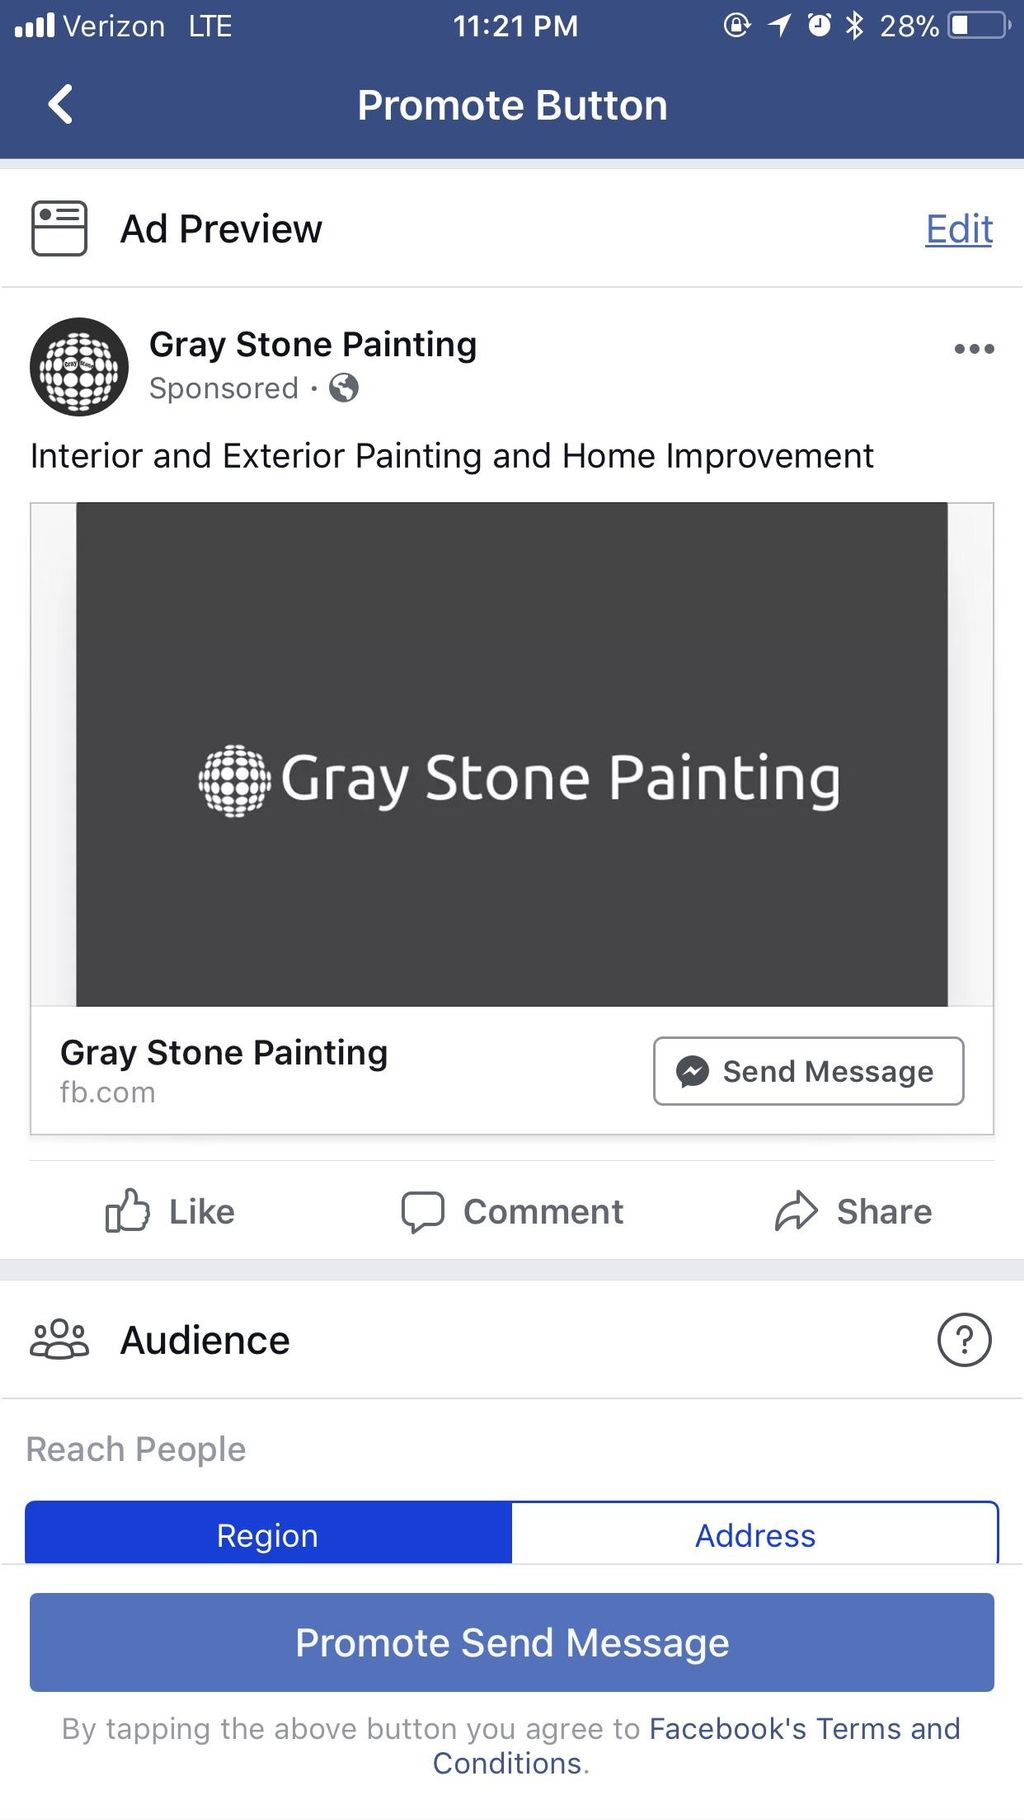 Gray Stone Painting